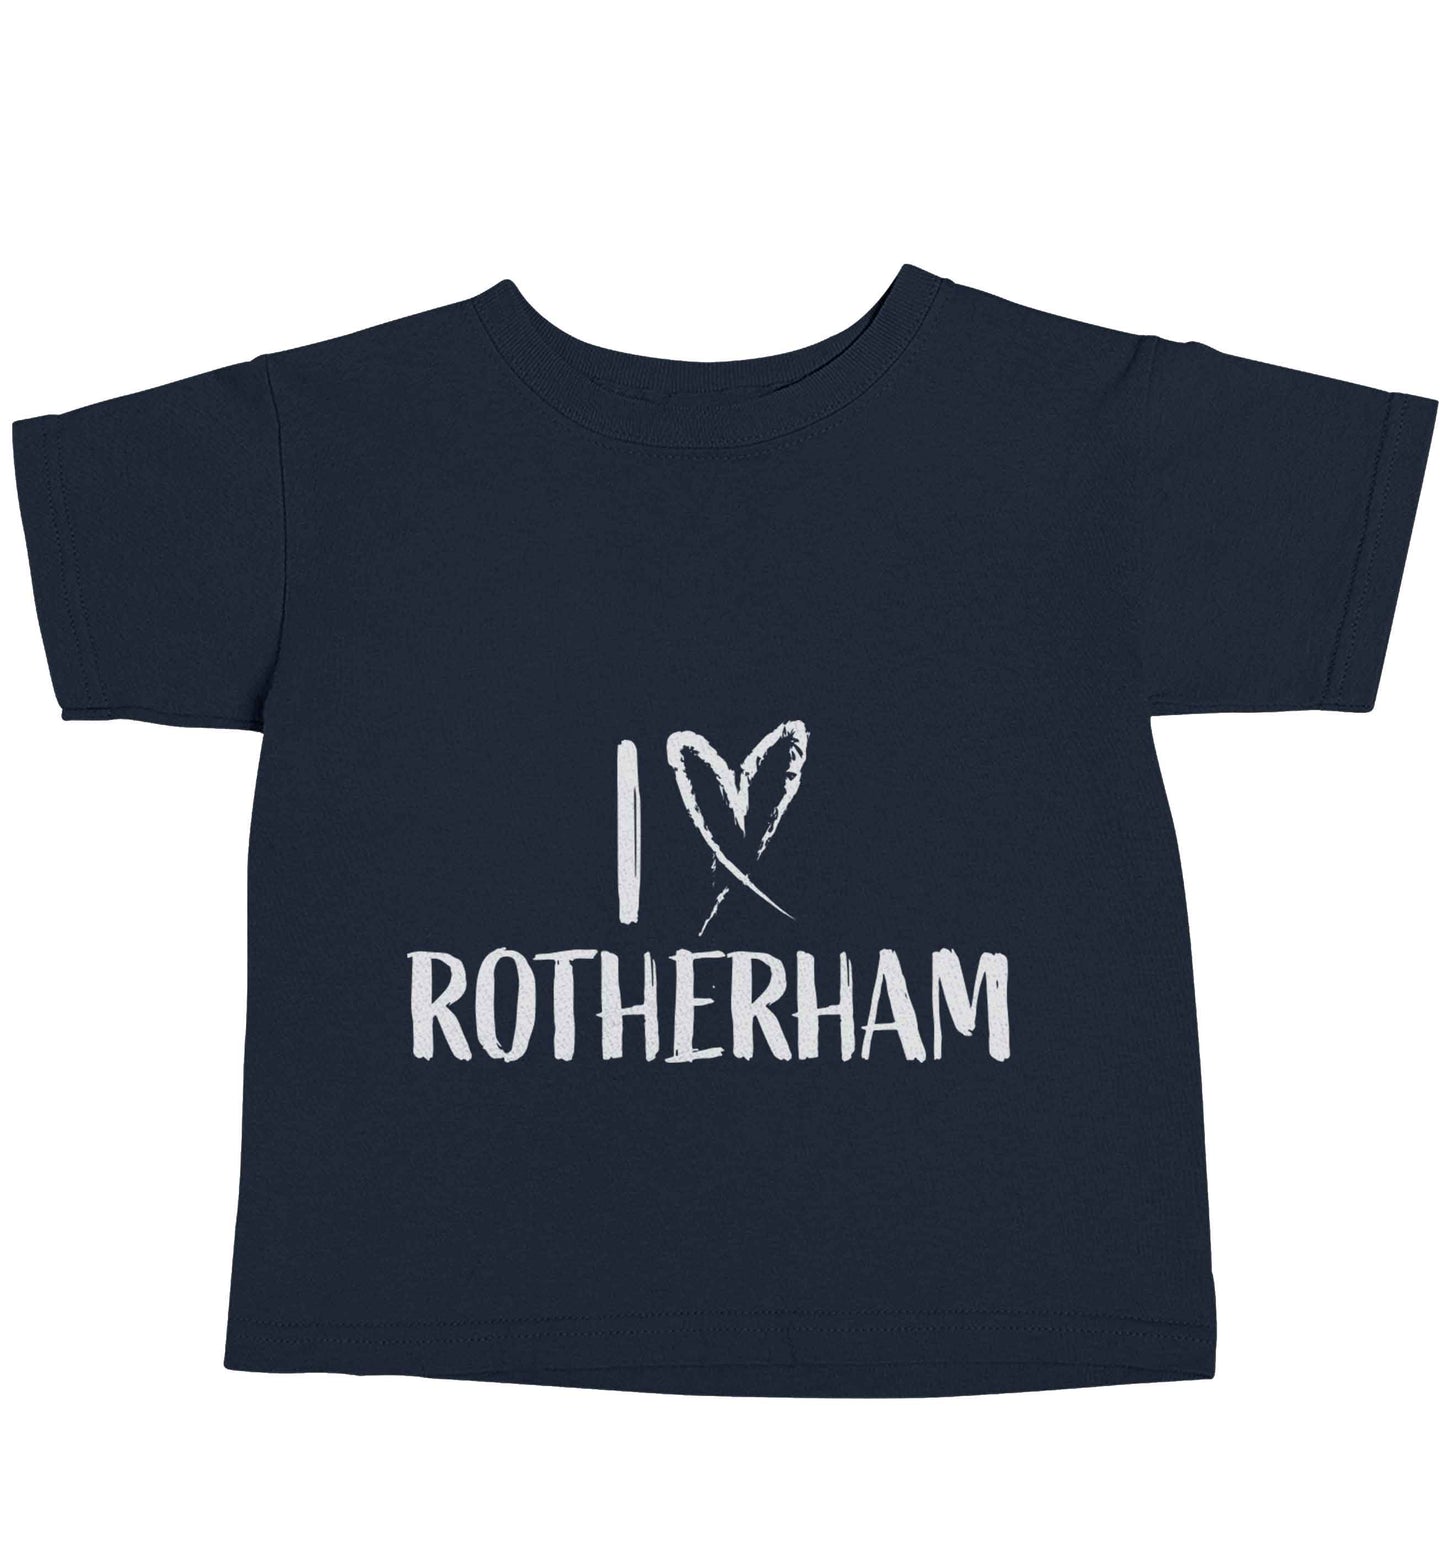 I love Rotherham navy baby toddler Tshirt 2 Years